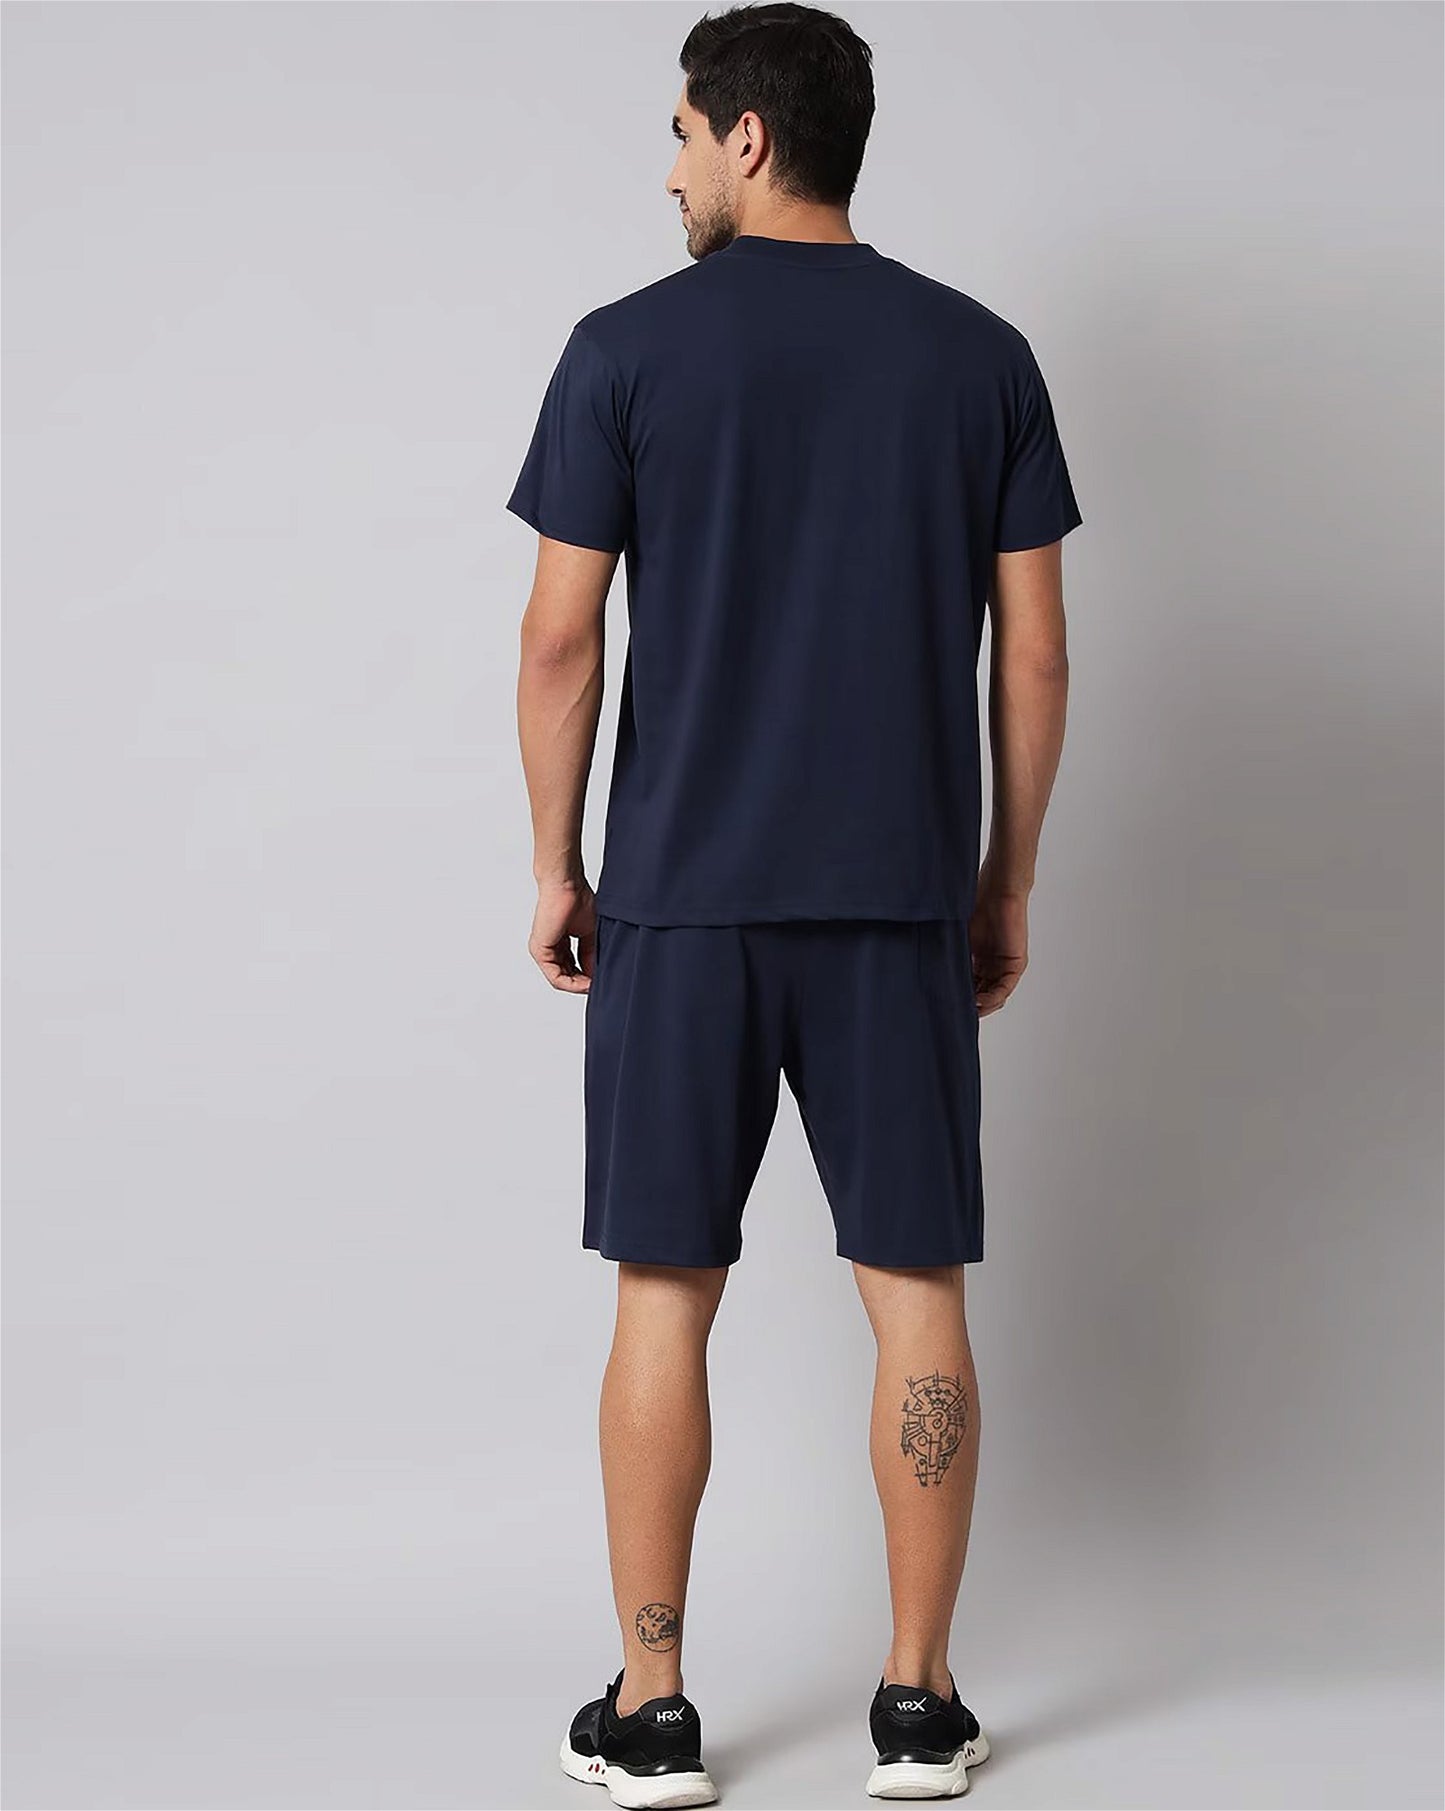 Navy Blue Plain T Shirt Half Sleeve And Shorts With Pocket